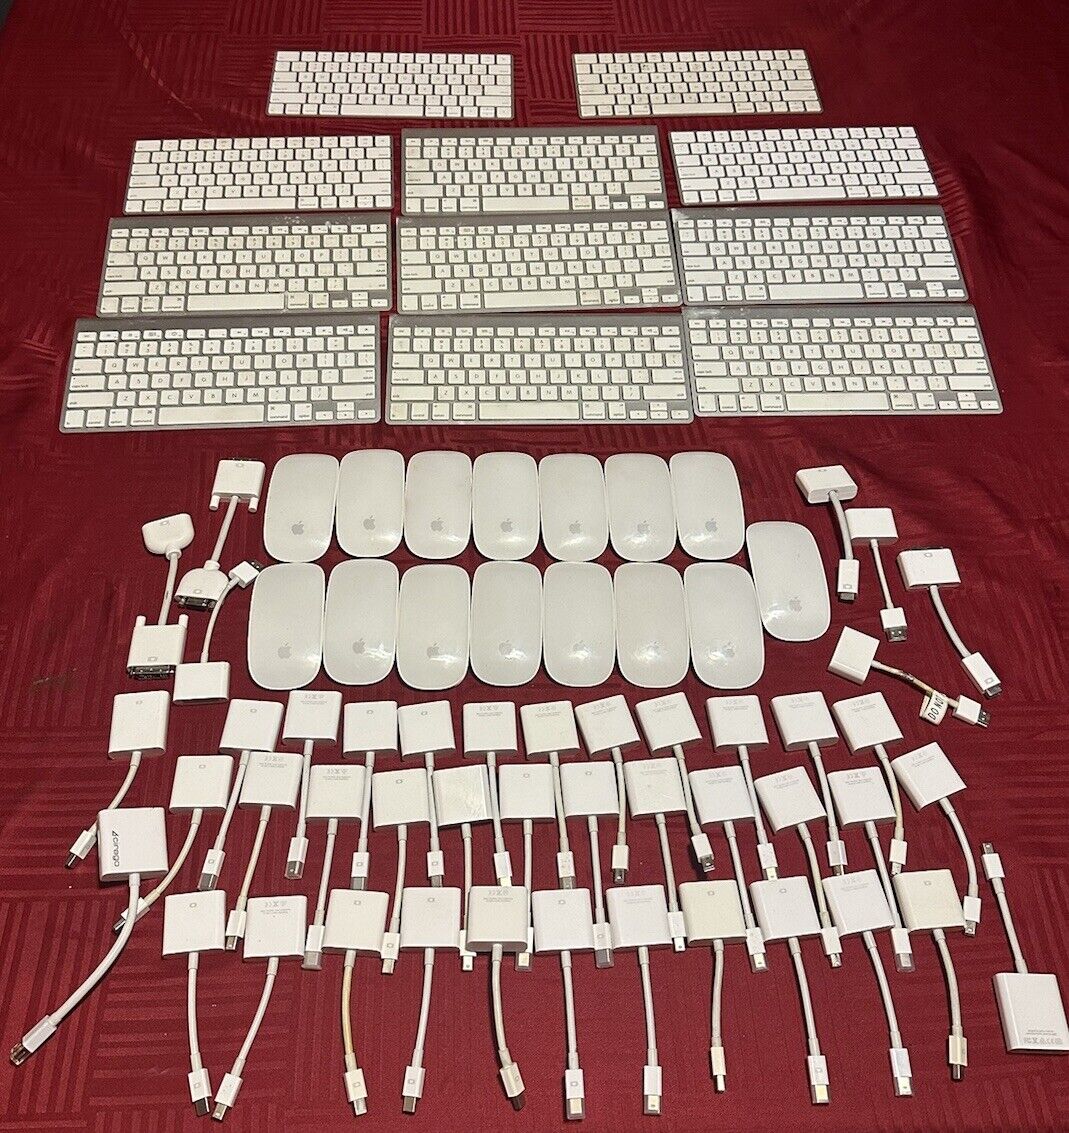 Lot of 15 Apple Mice a1644, 11 Wireless Keyboards, 44 AV/VGA/DVI/HDMI Cable READ